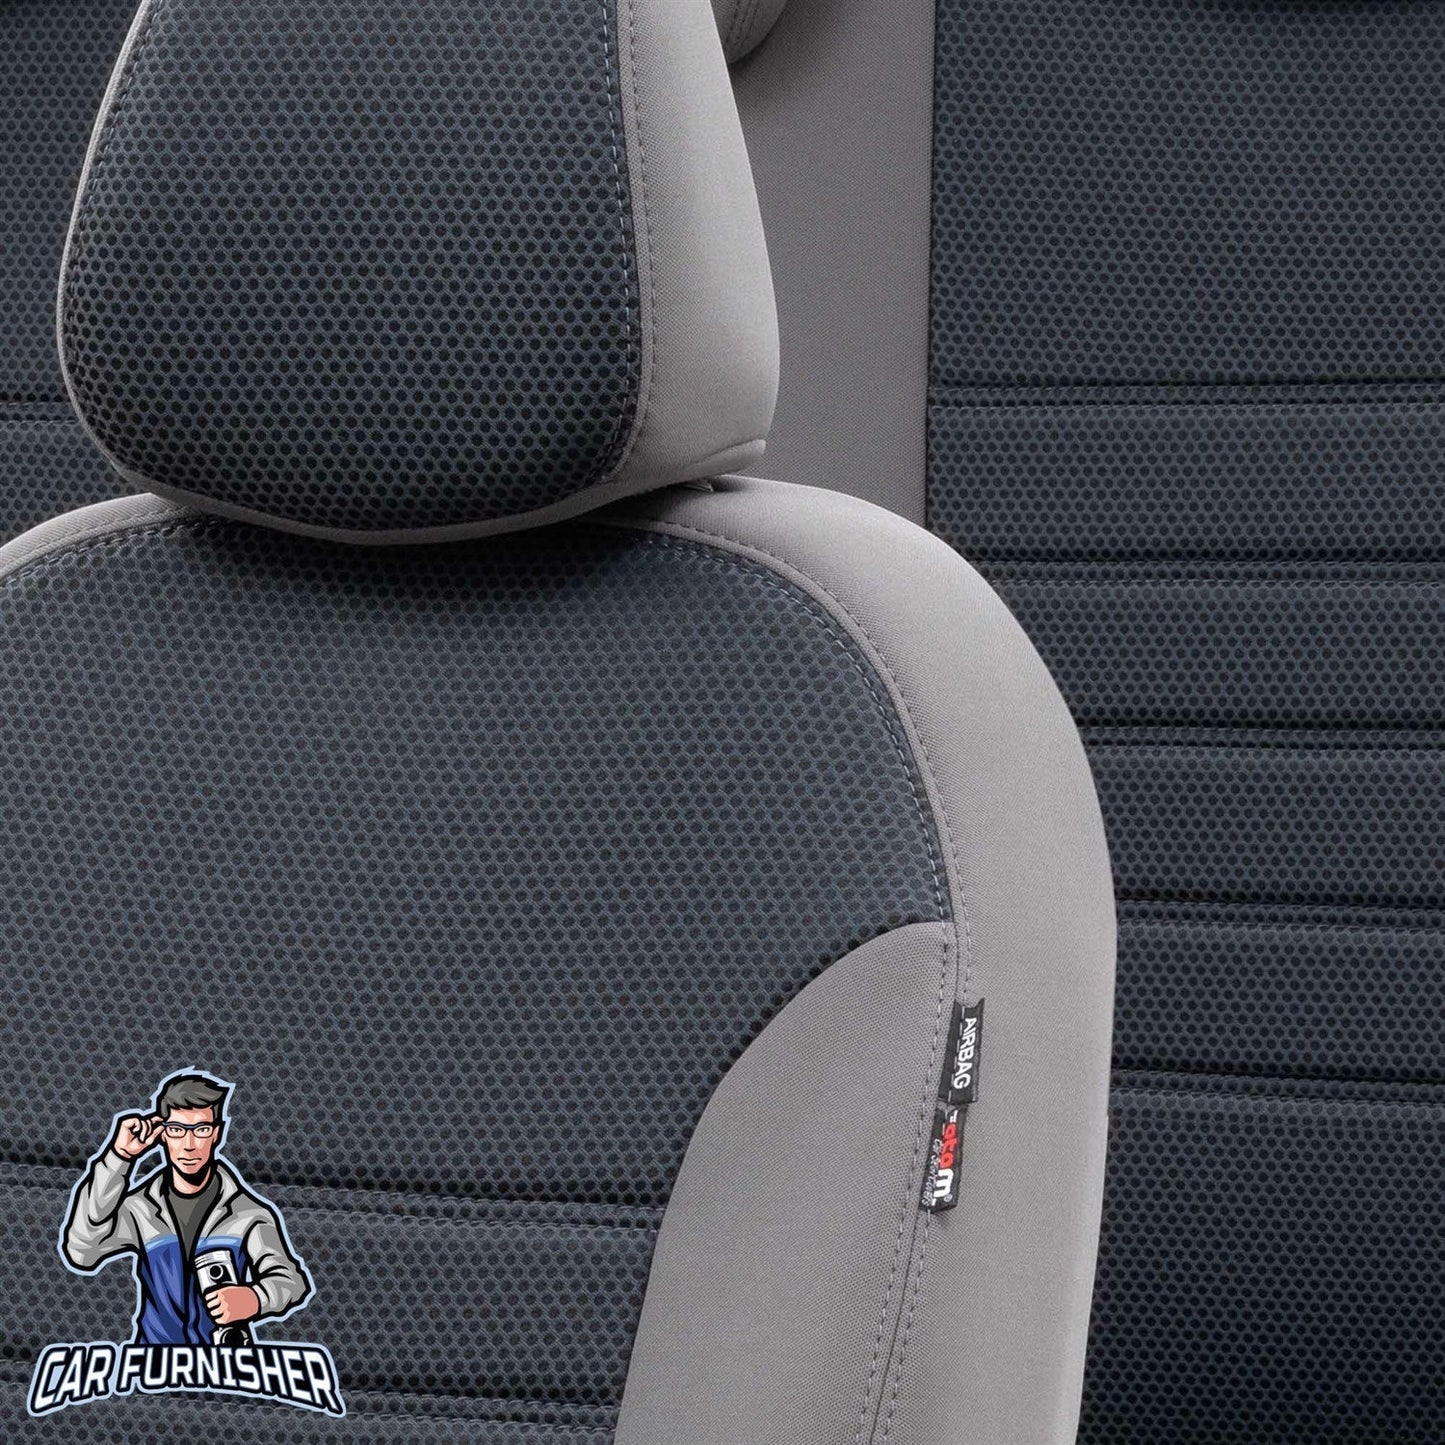 Citroen C1 Seat Covers Original Jacquard Design Smoked Jacquard Fabric